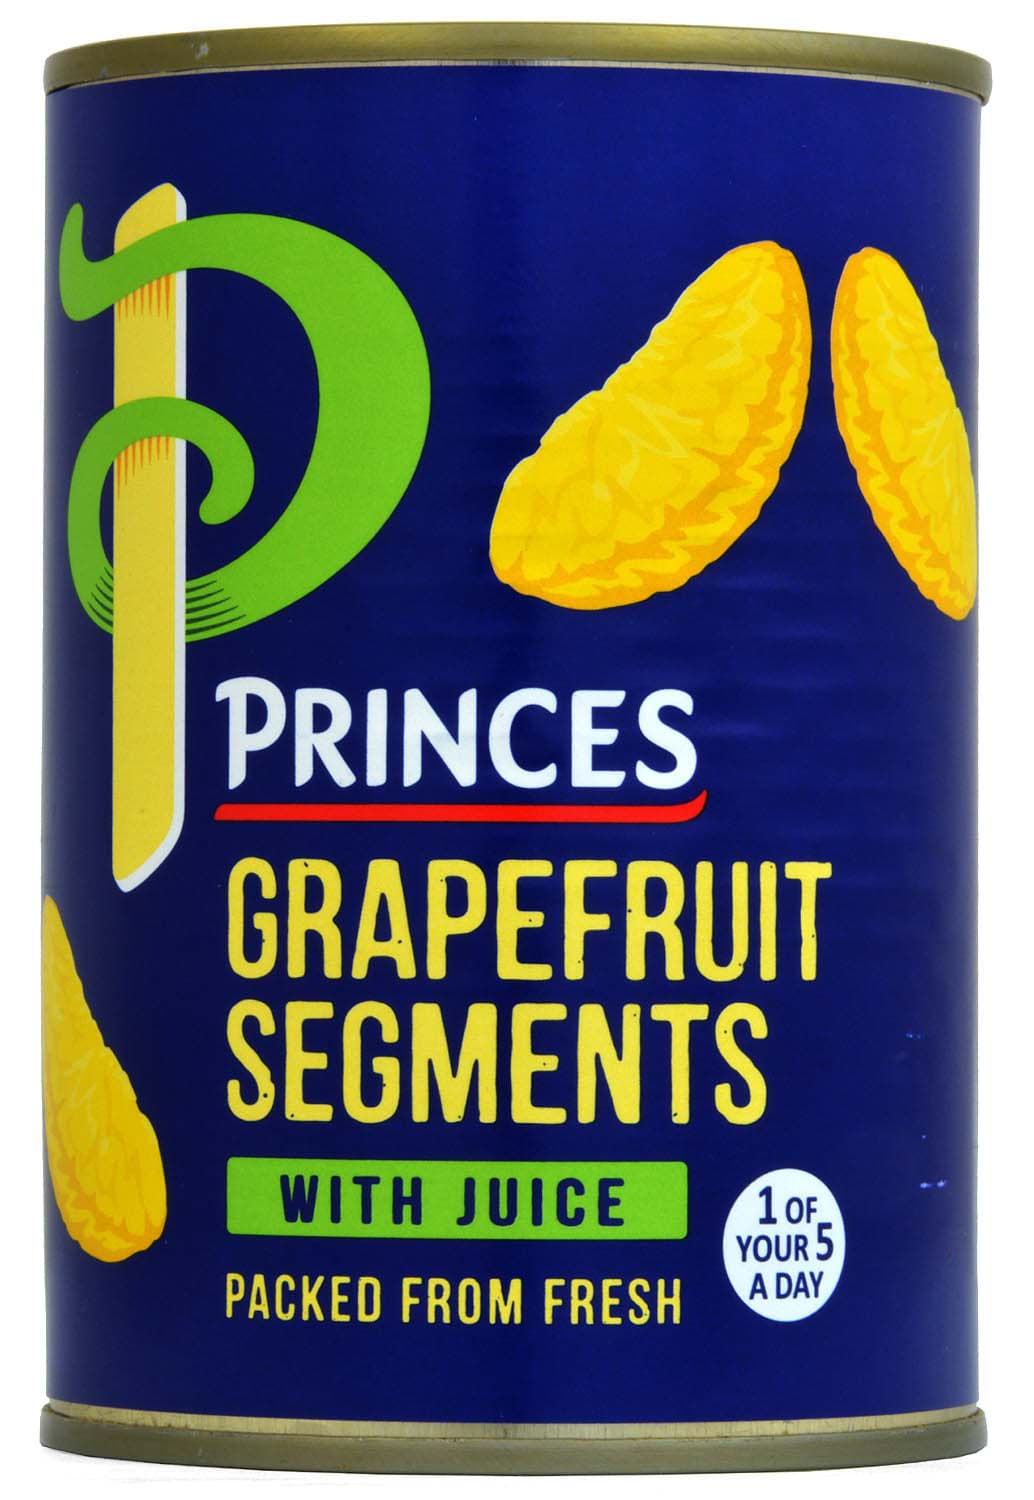 Picture of Princes Grapefruit Segments in Juice